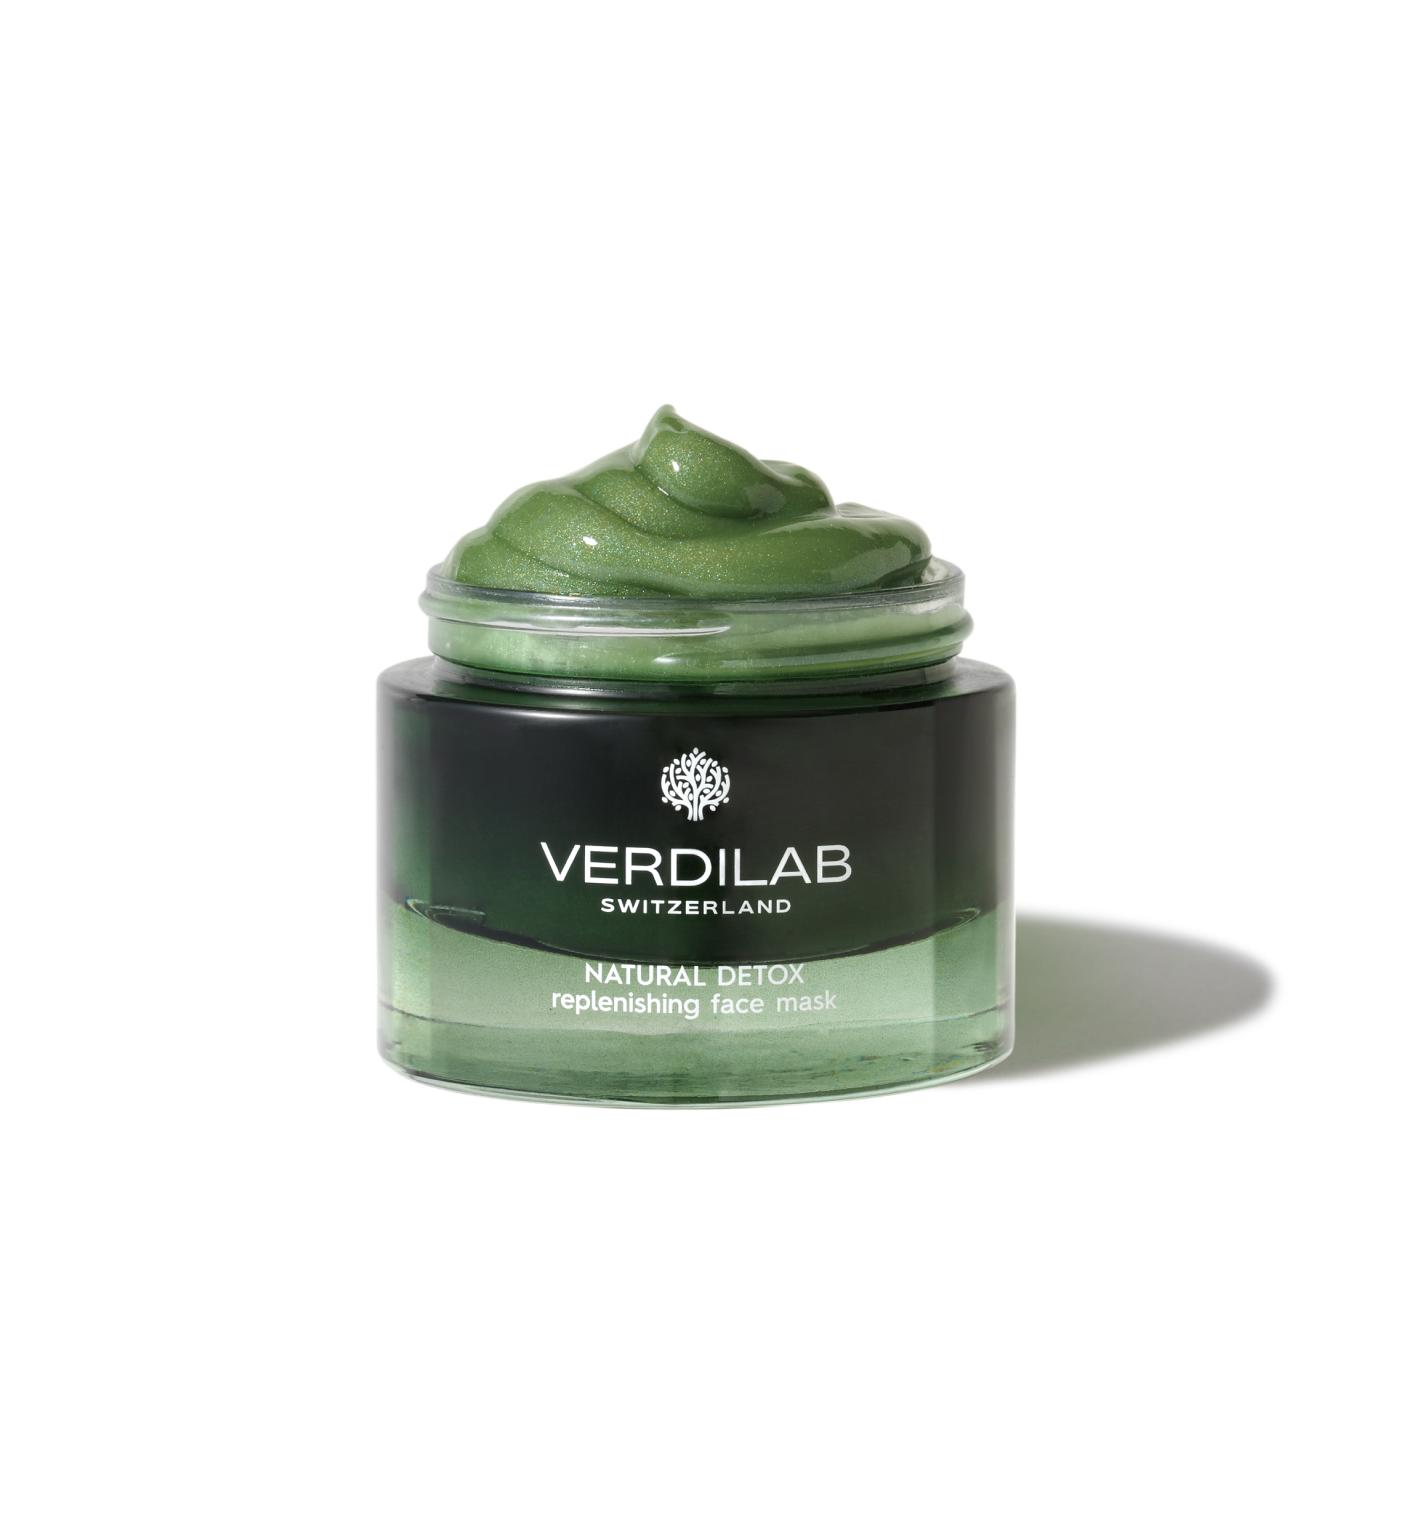 Verdilabs Natural Detox Replenishing Face Mask jar